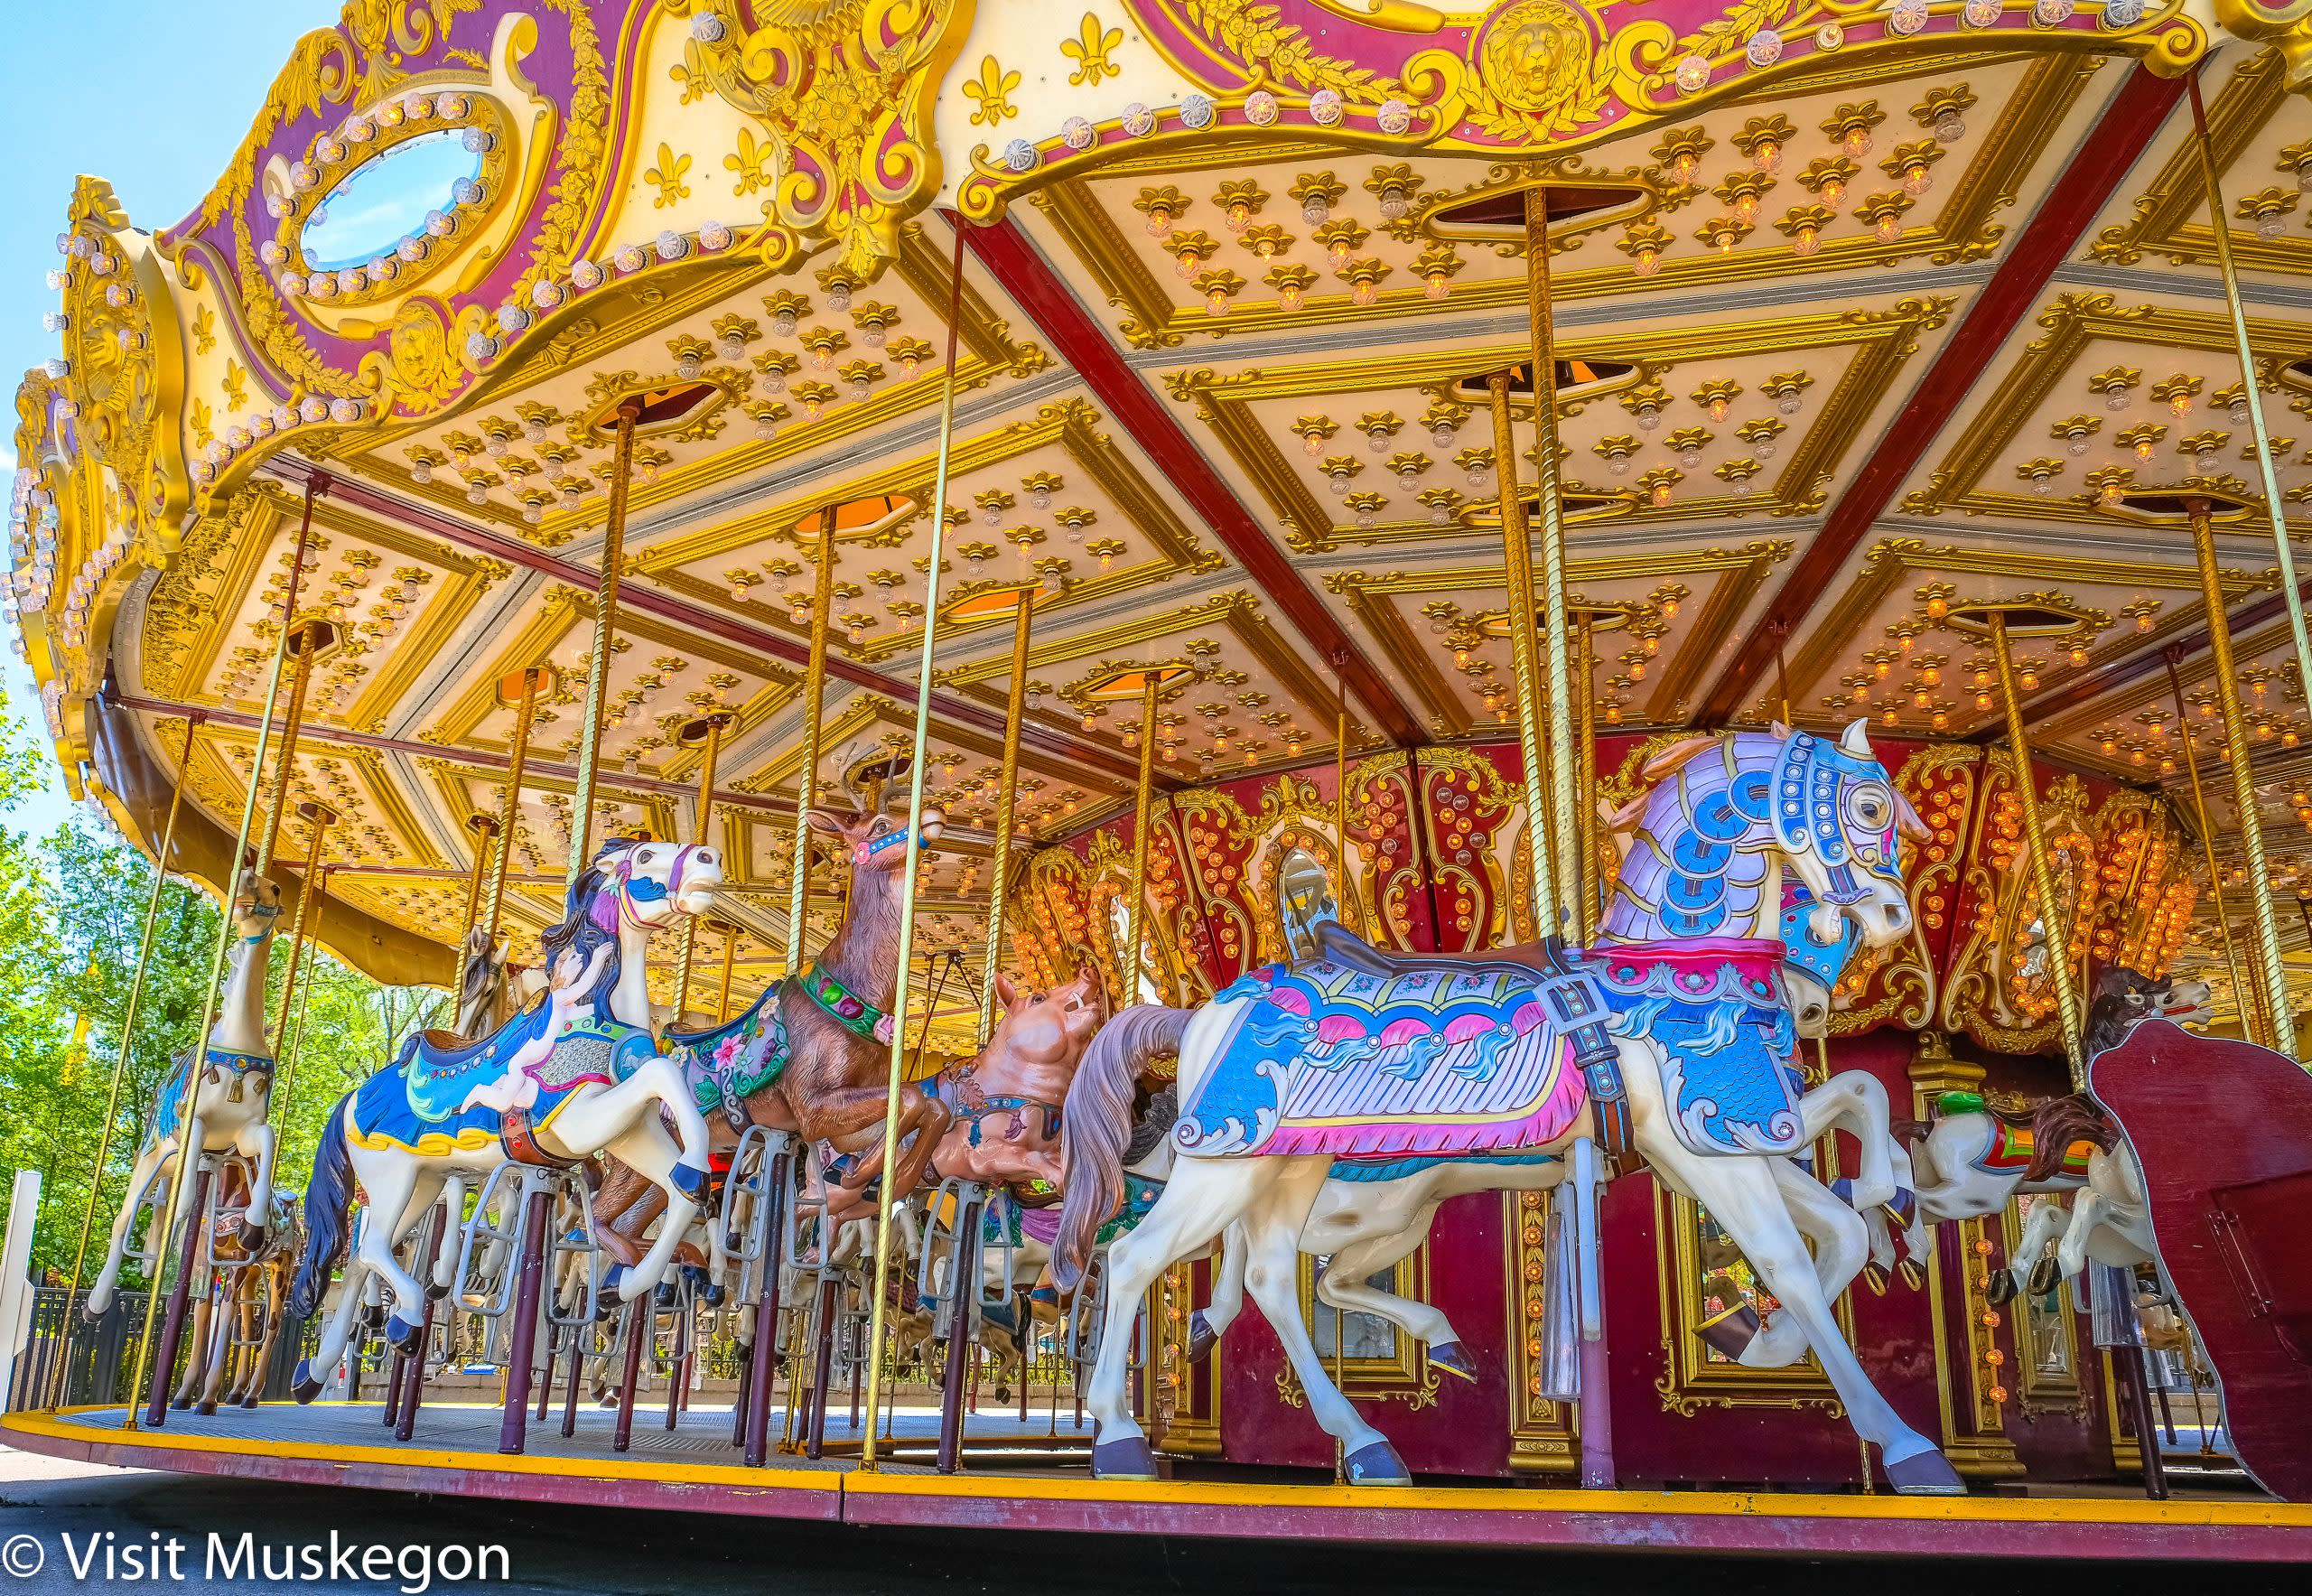 brightly painted horses on illuminated merry go round